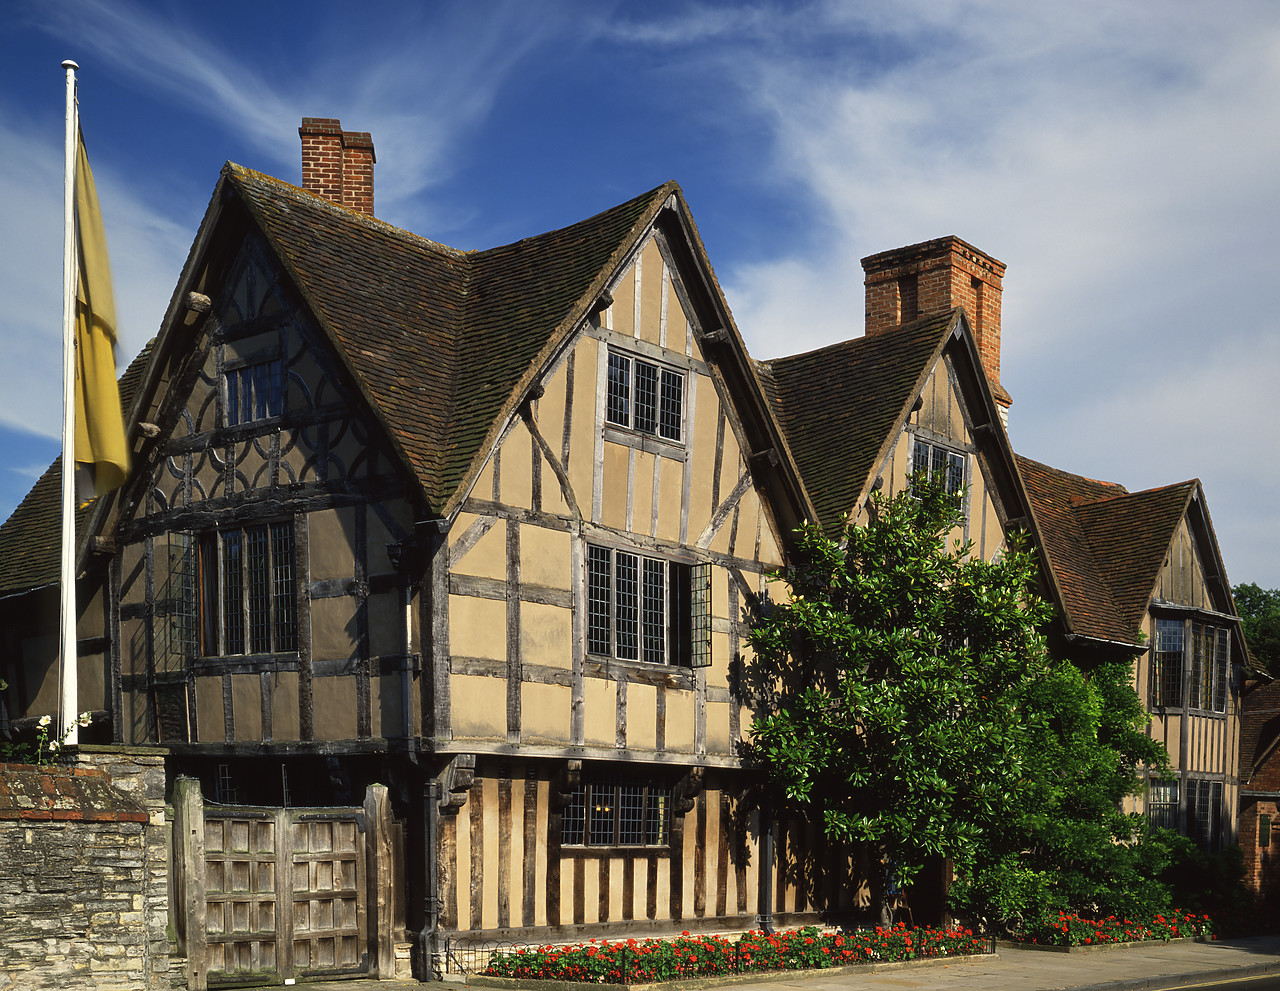 #881534 - Hall's Croft, Stratford-upon-Avon, Warwickshire, England